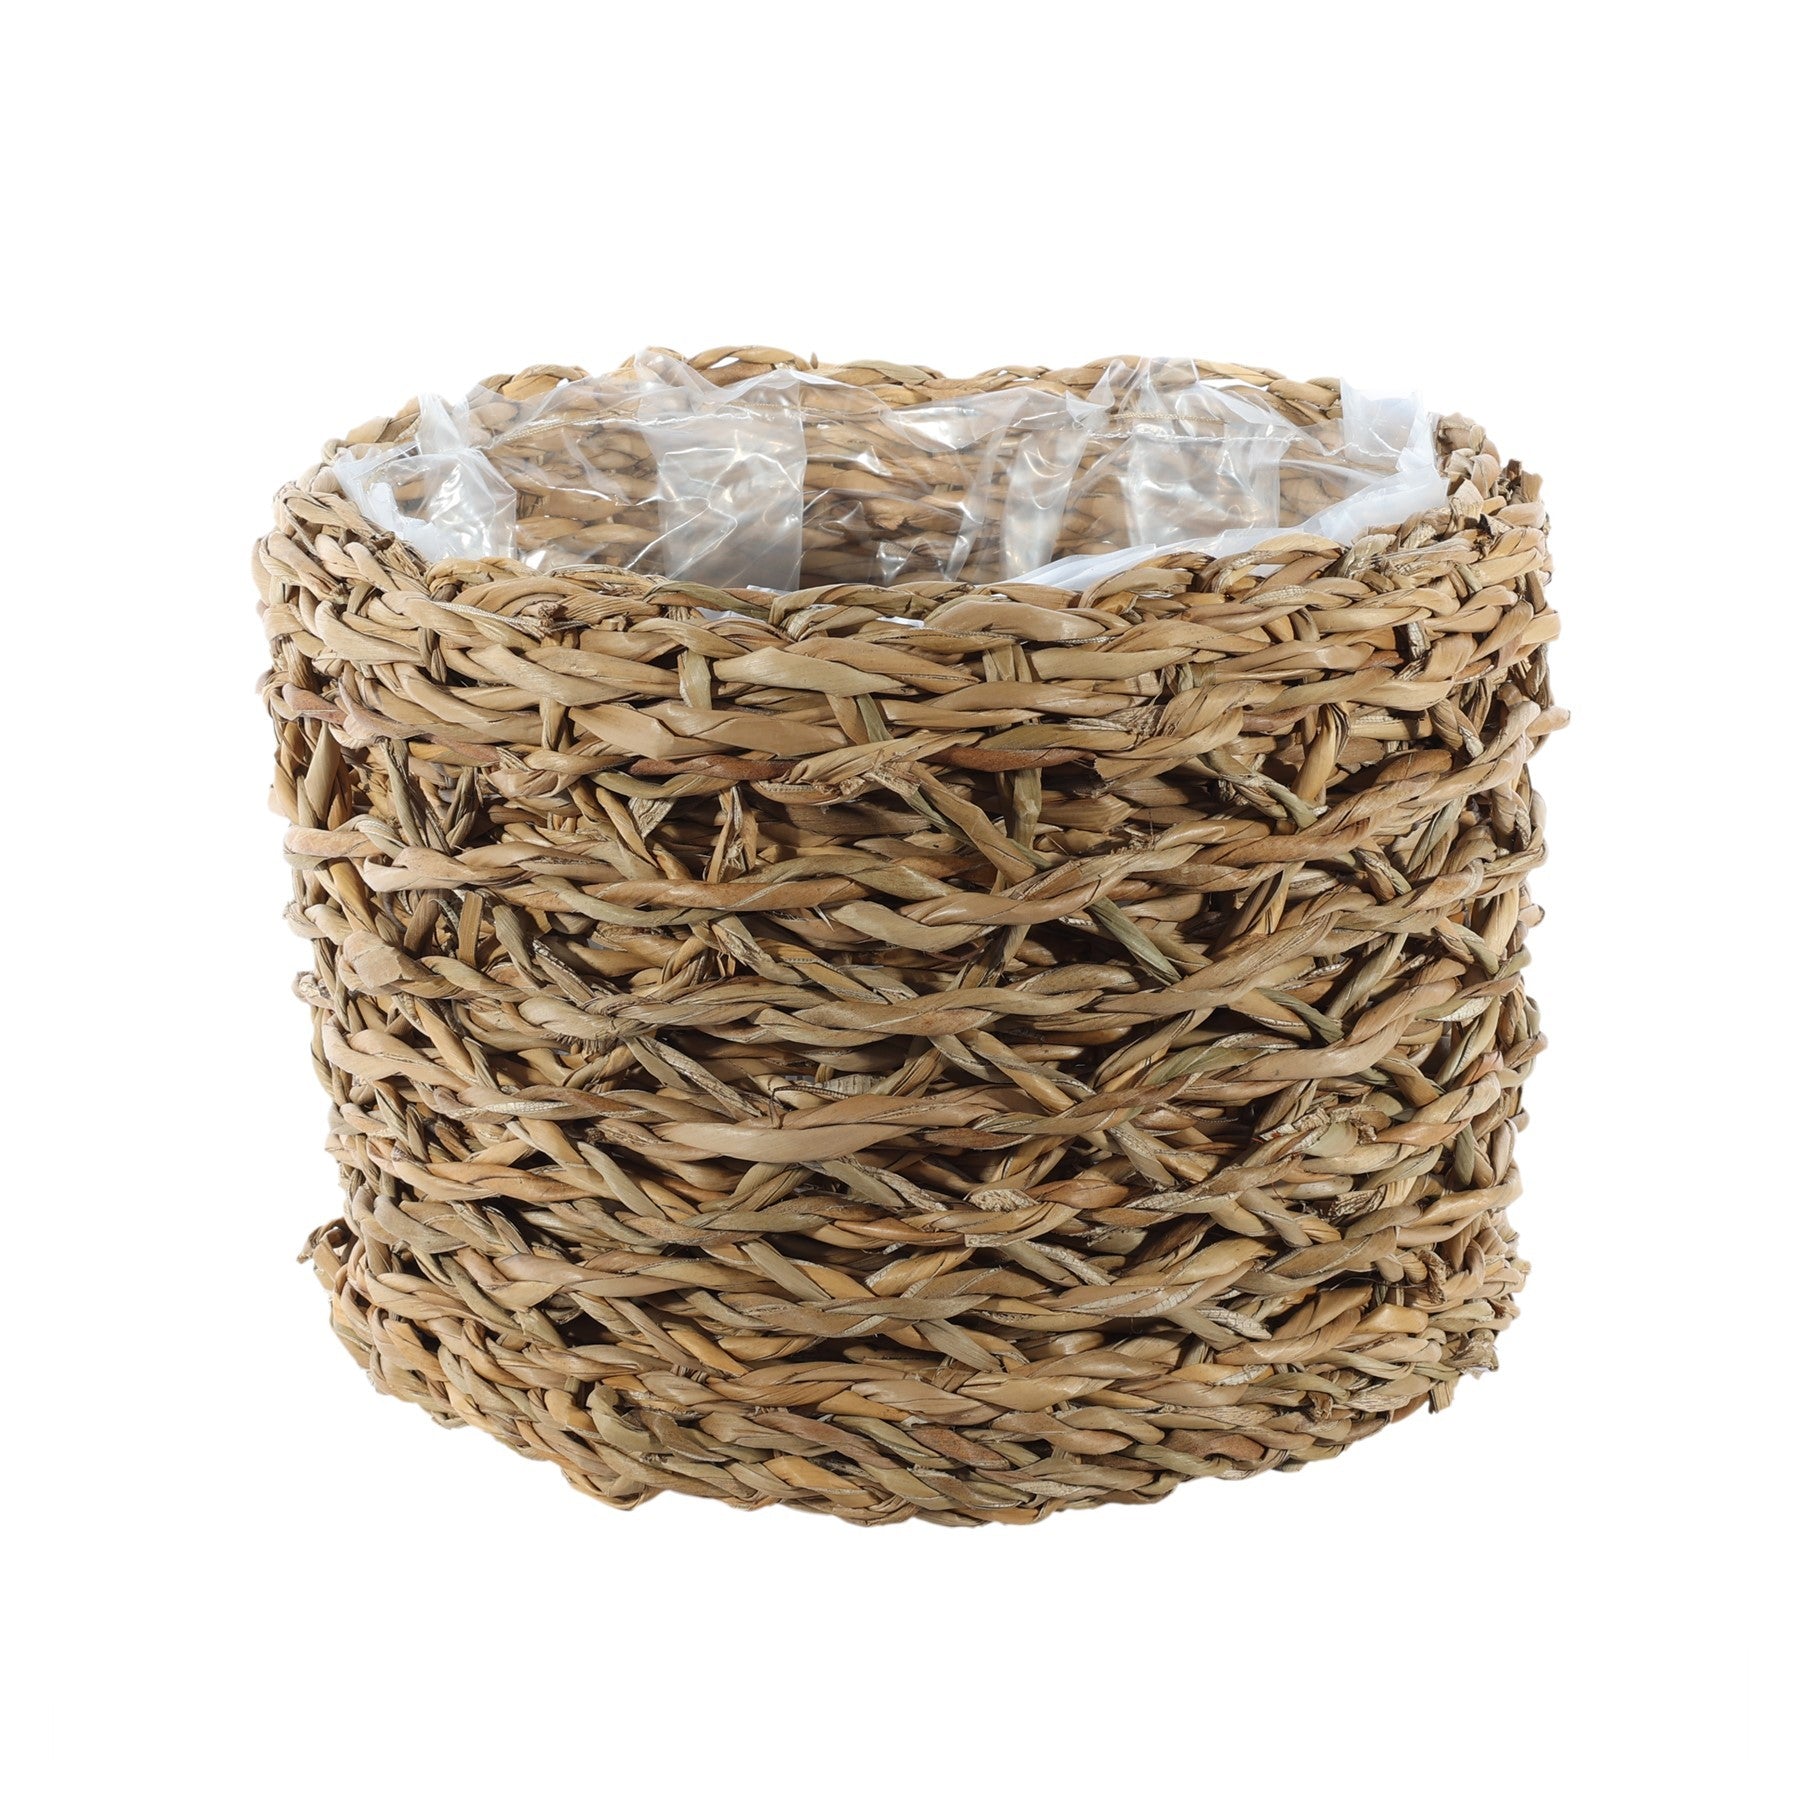 View Round Natural Seagrass Basket H155cm x D21cm information